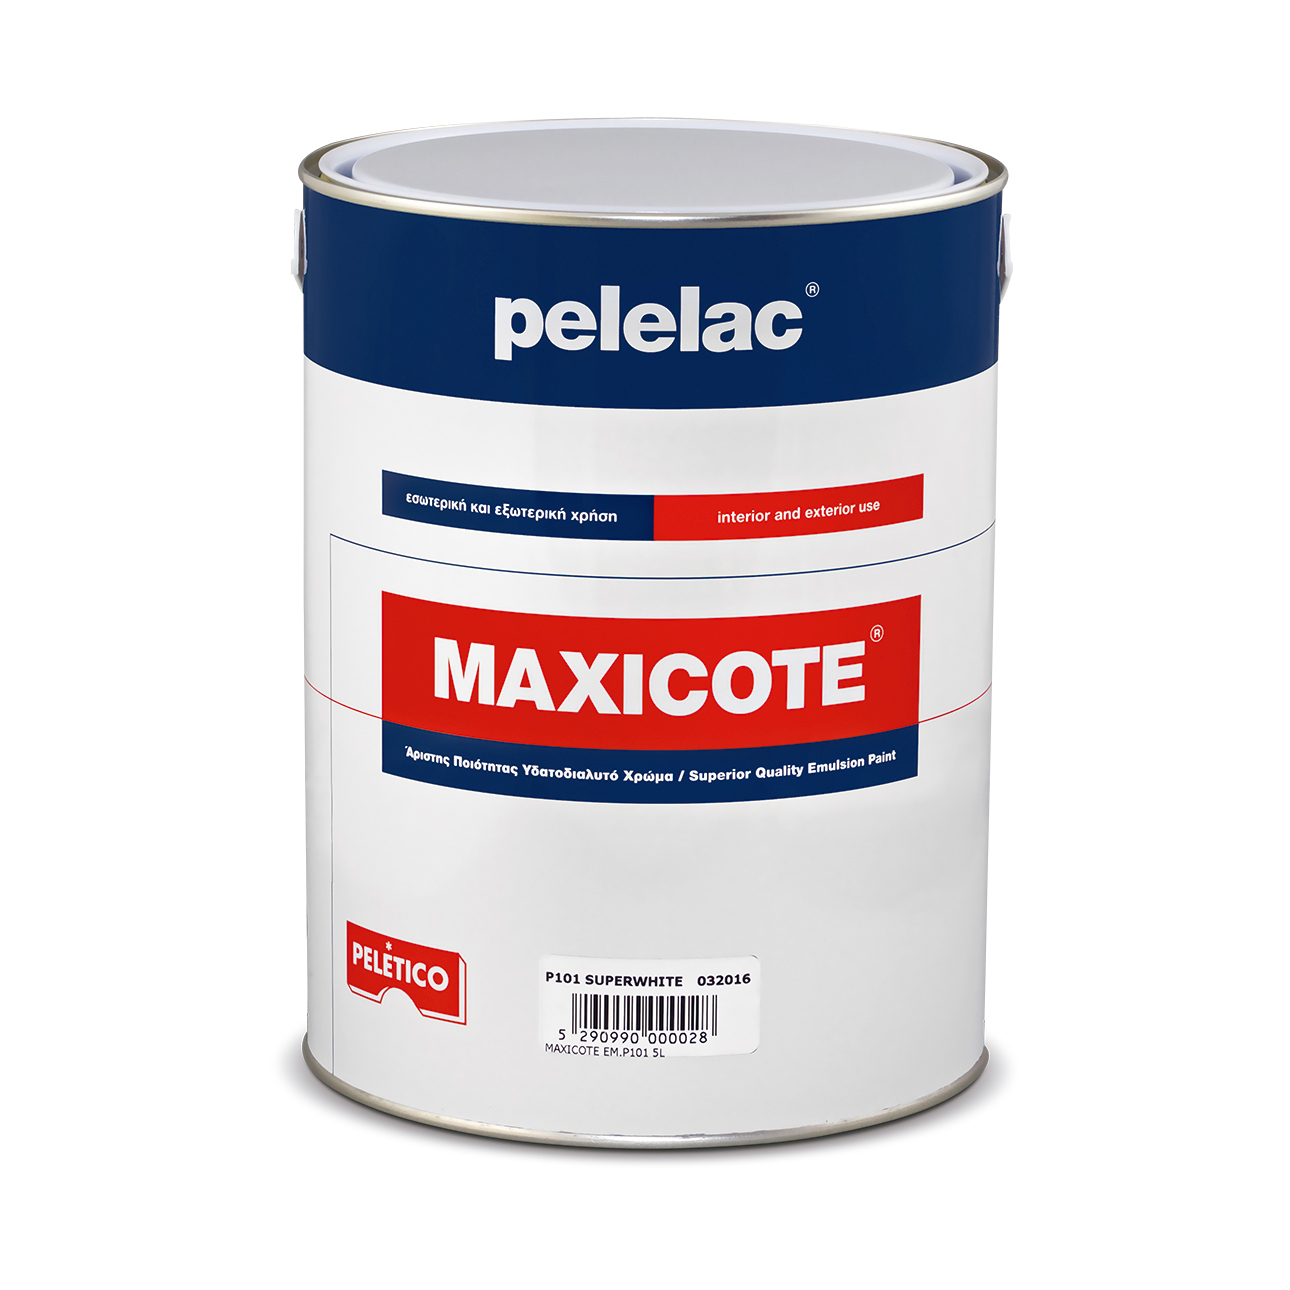 PELELAC MAXICOTE® EMULSION MODERN WHITE P202 0.75L